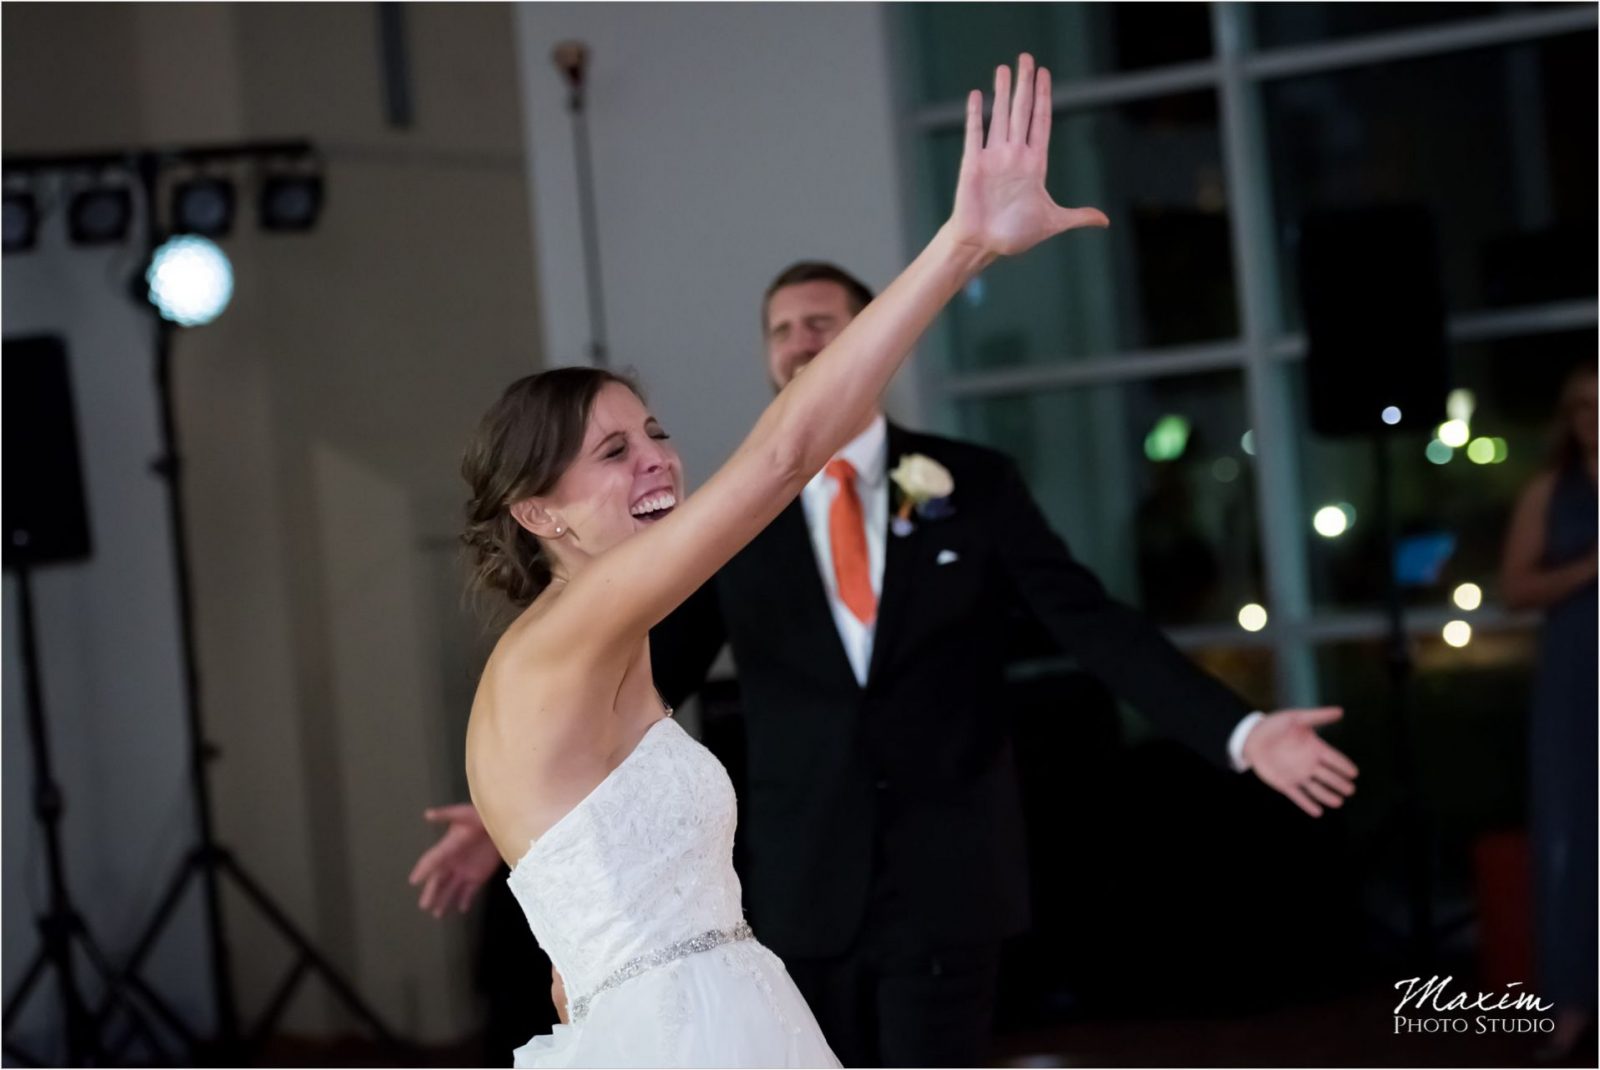 Paul Brown Stadium Cincinnati Wedding Photography Reception dance